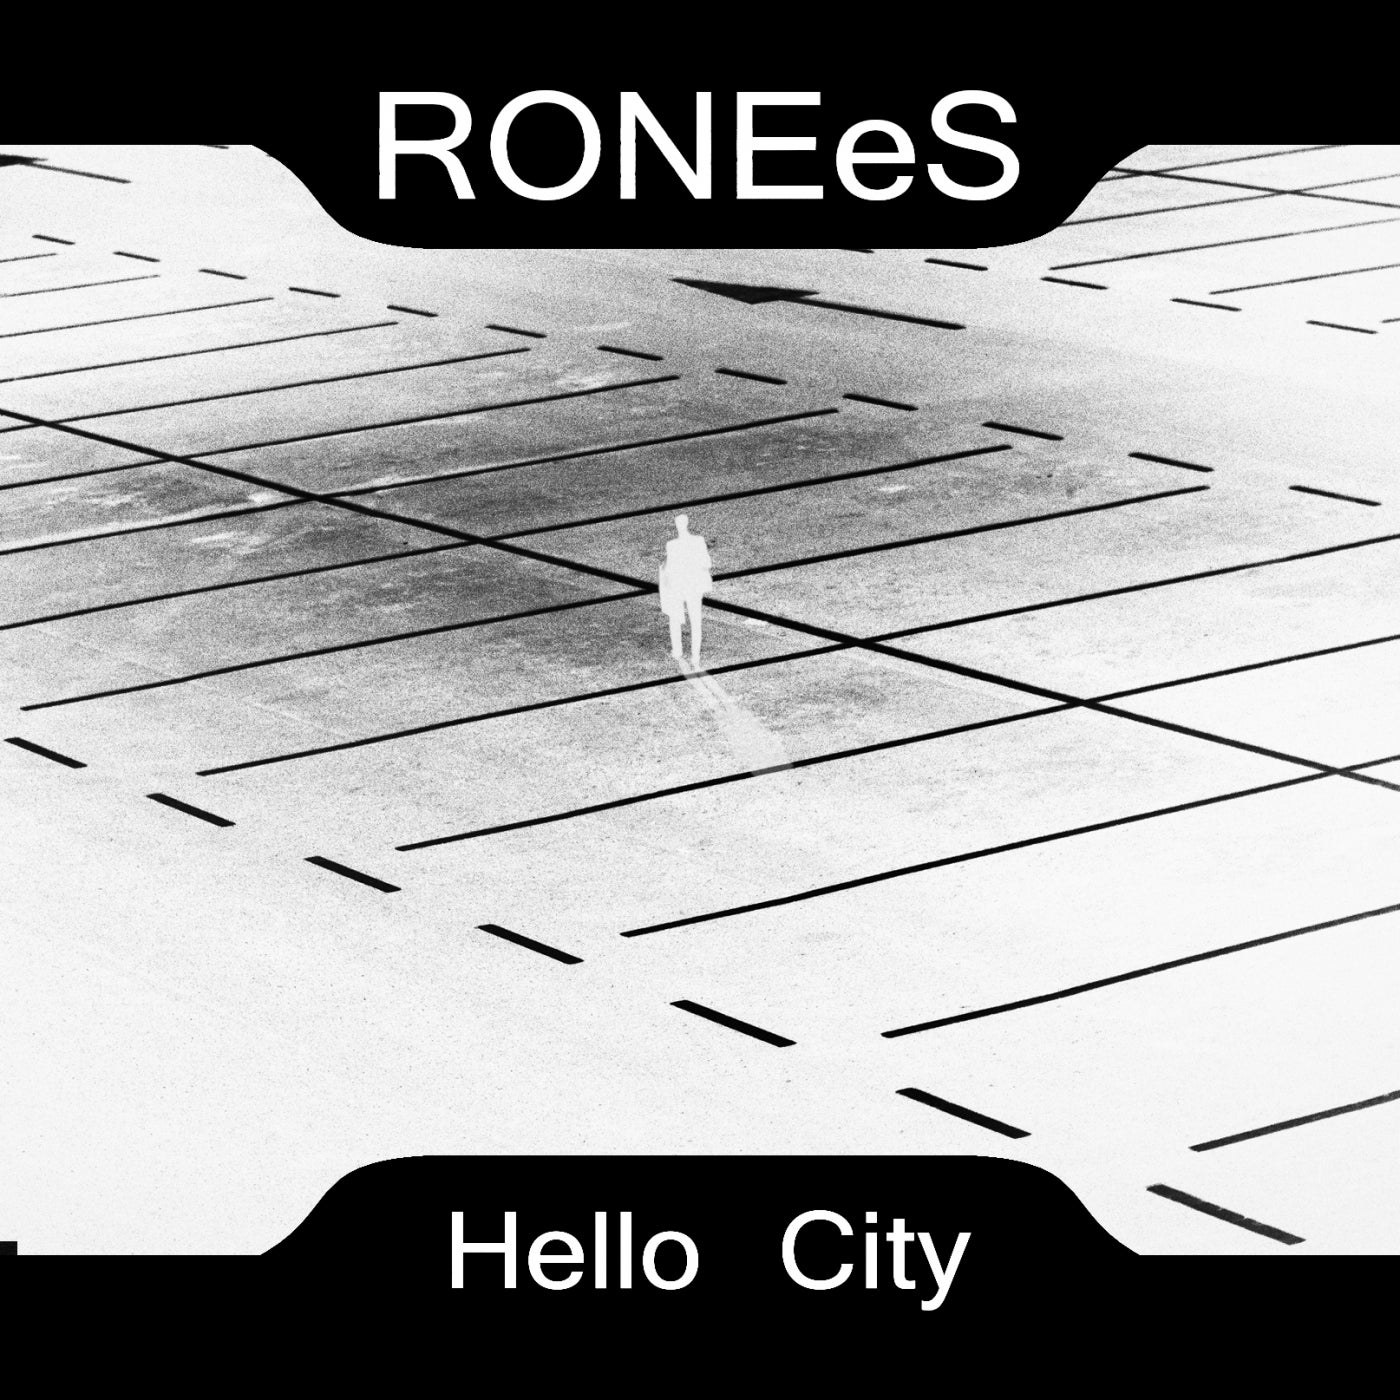 Hello city. Goodbye City. Кассета Ronees CD-60 F. Трек hello мир манера крутит мир чёрно-белая картинка.